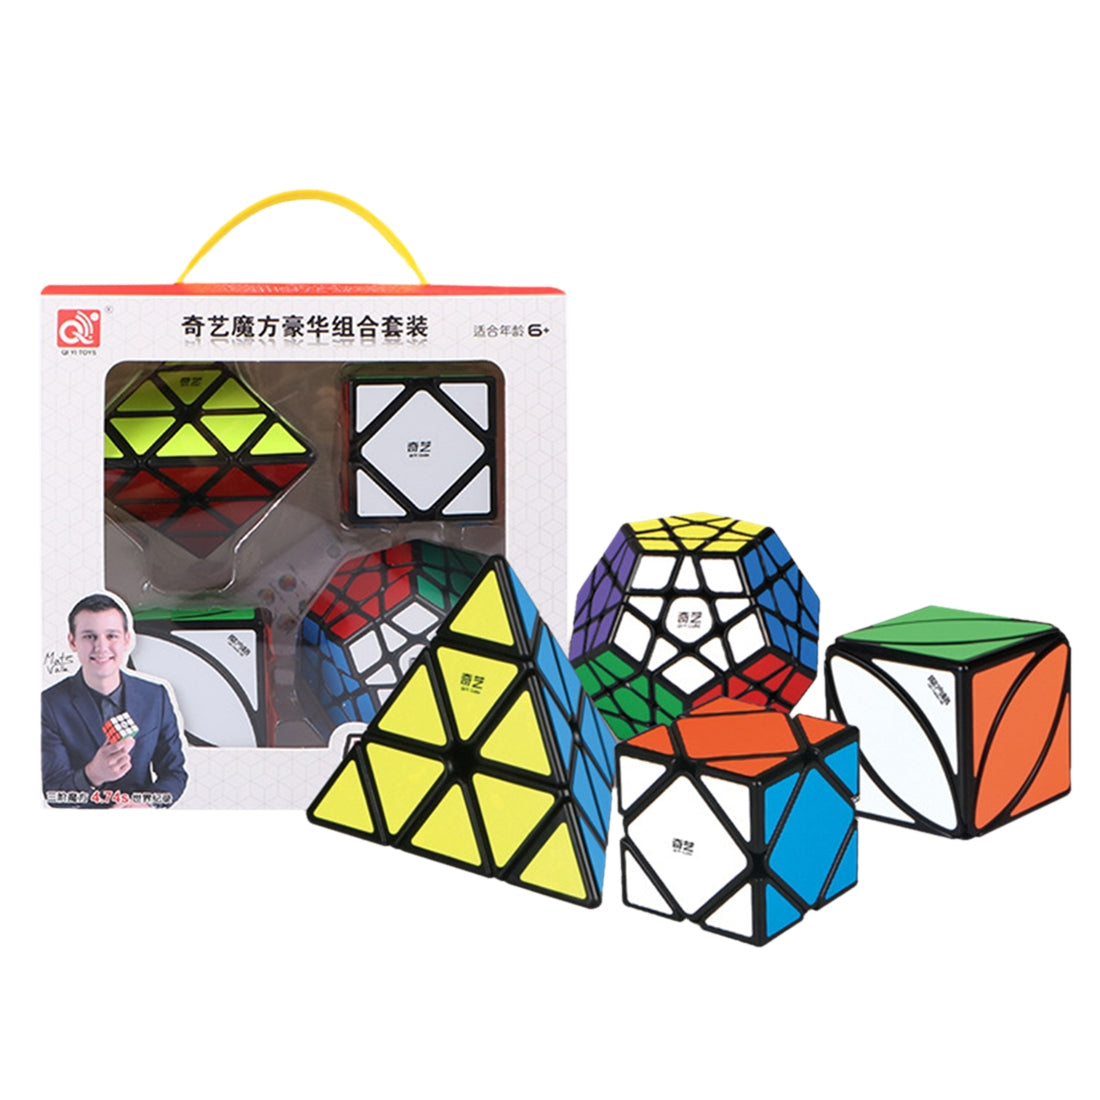 Set of 4 Cubes - Pyraminx, Skewb, Megaminx, Ivy cube